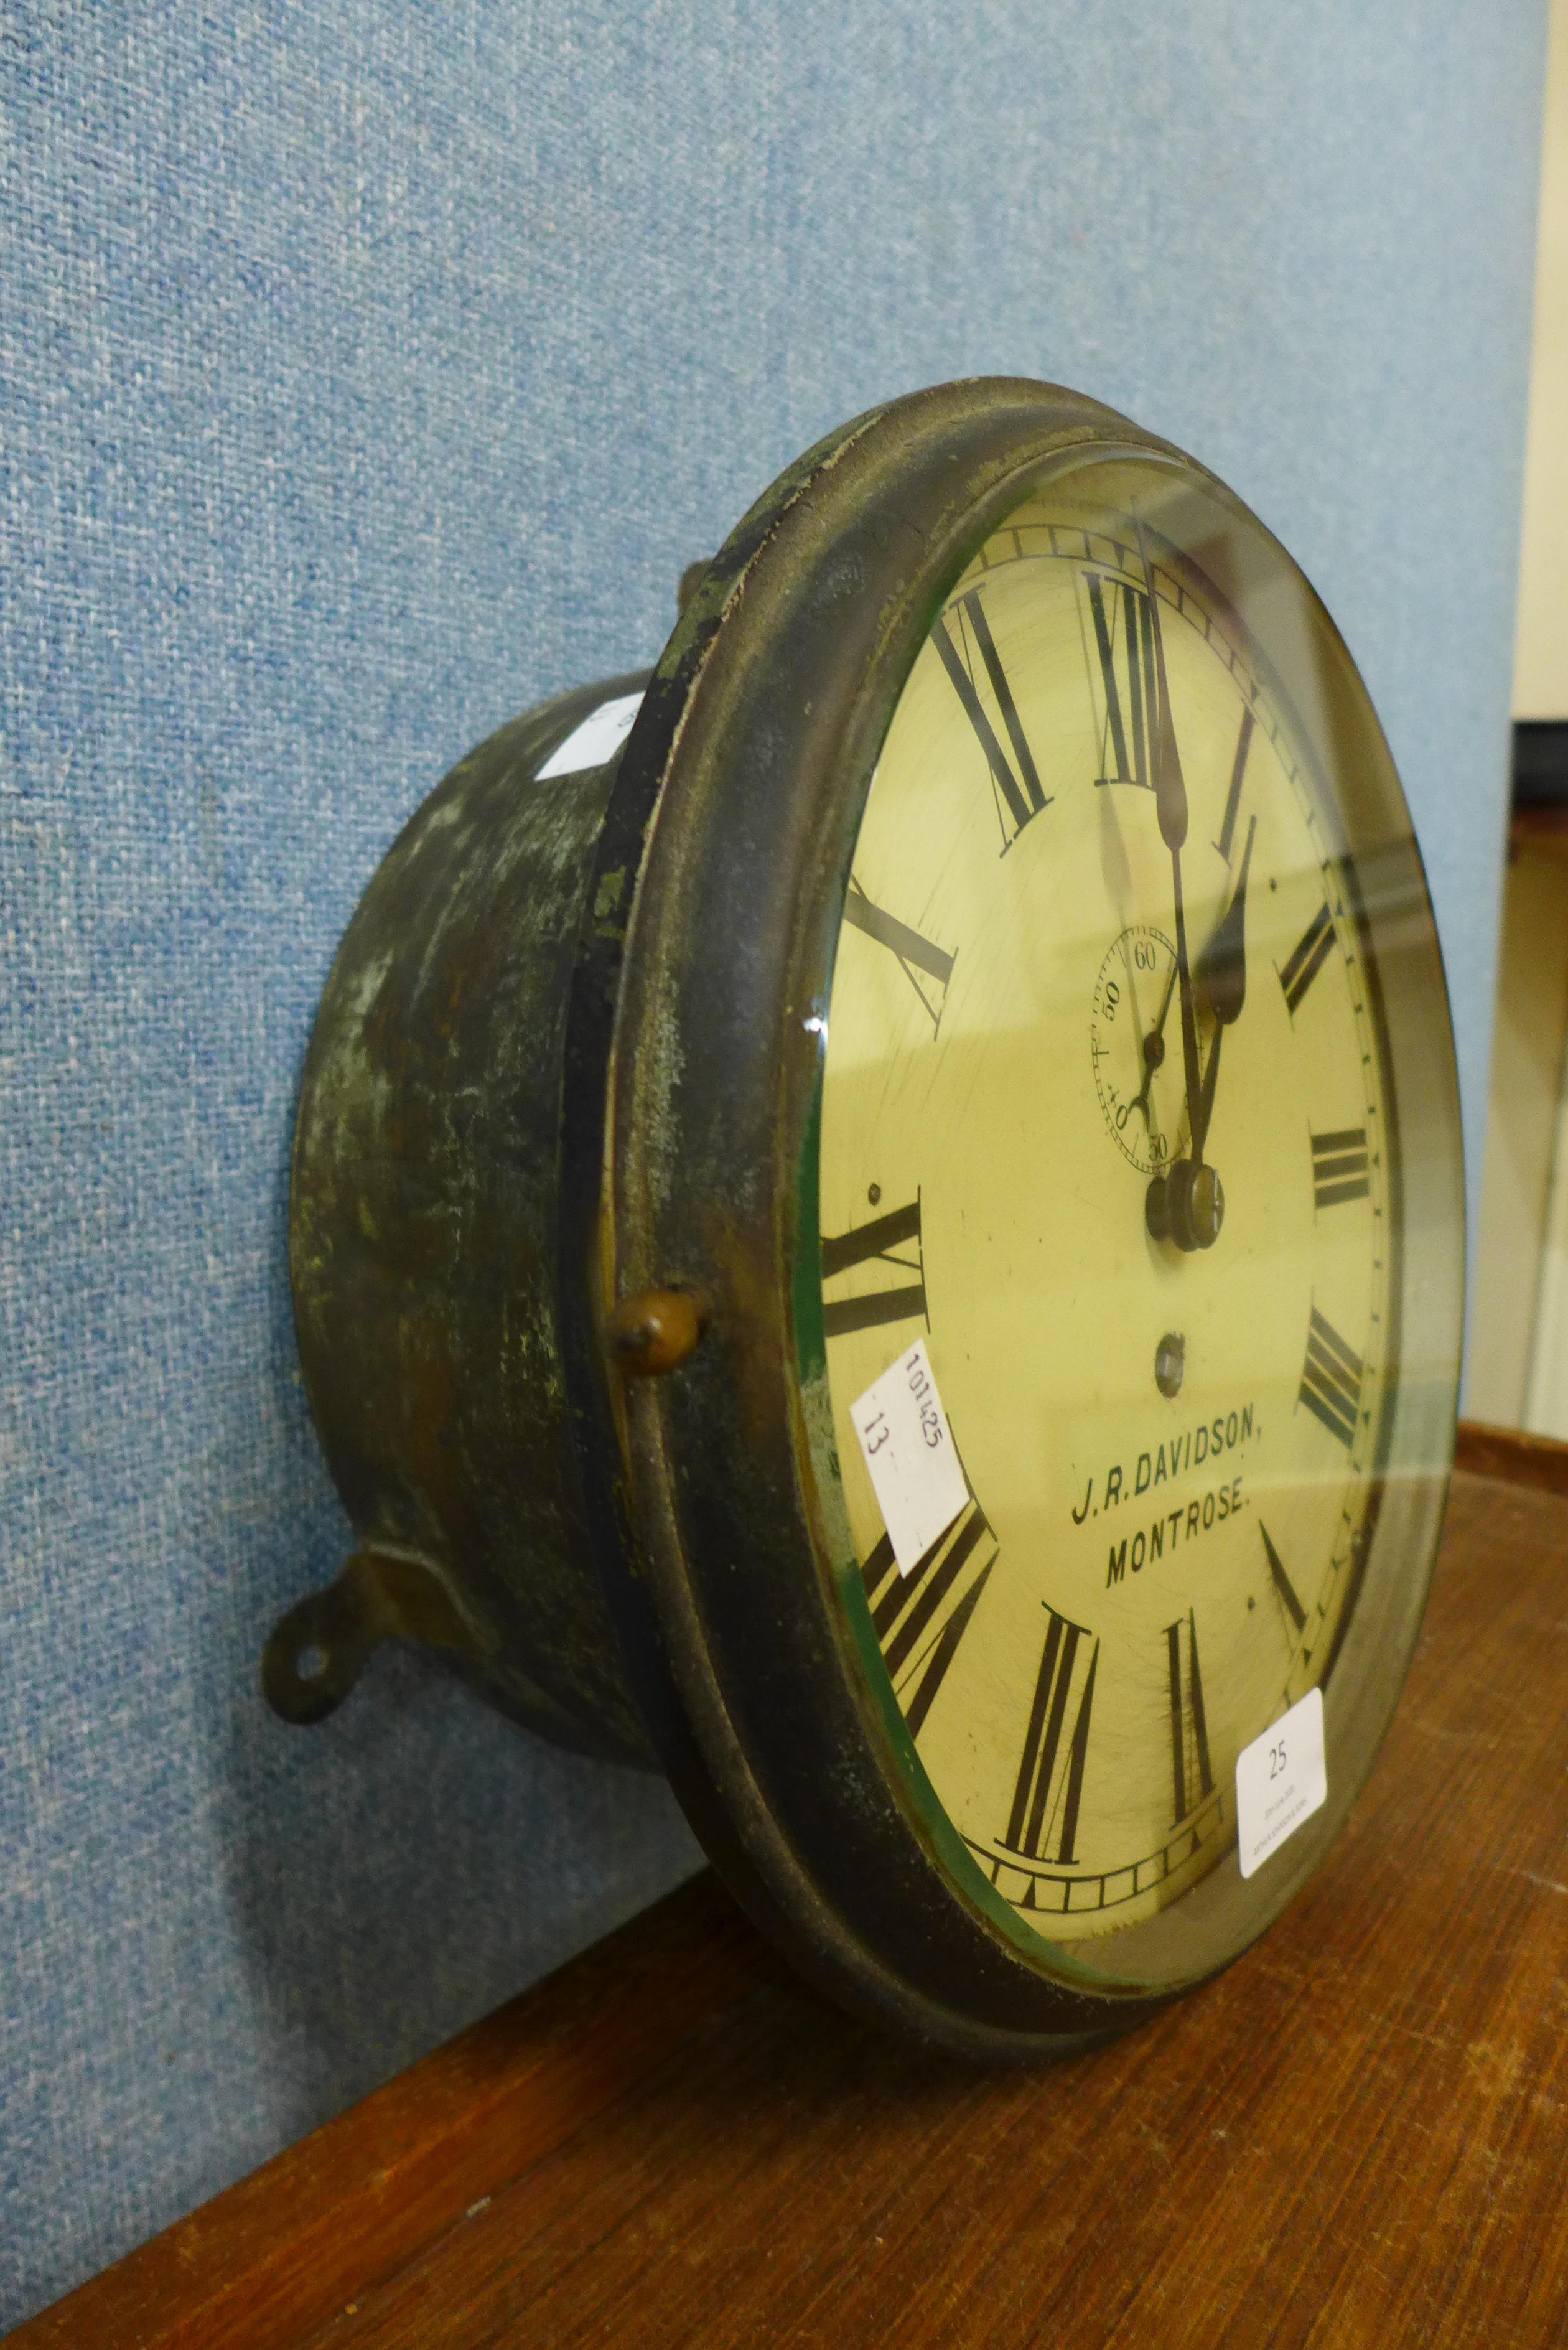 A brass circular ships clock, the dial signed J.R. Davidson, Montrose - Image 4 of 9